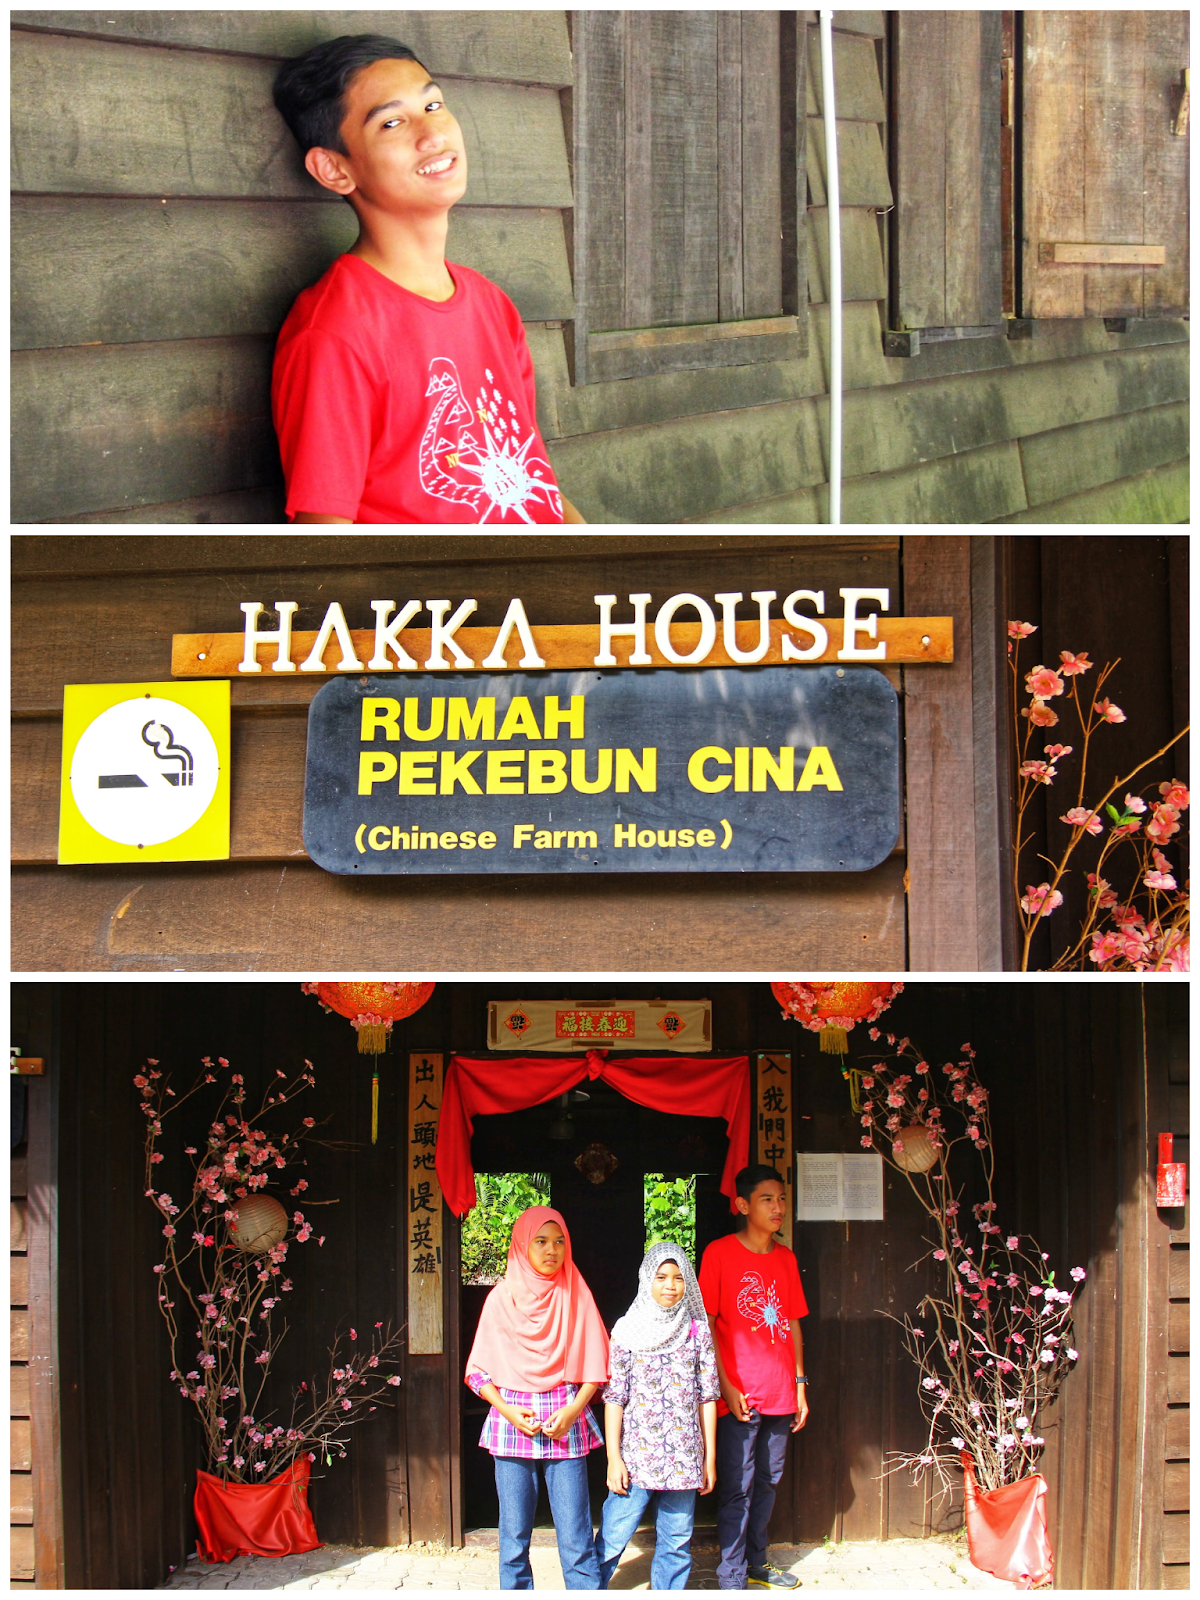 Hakka House